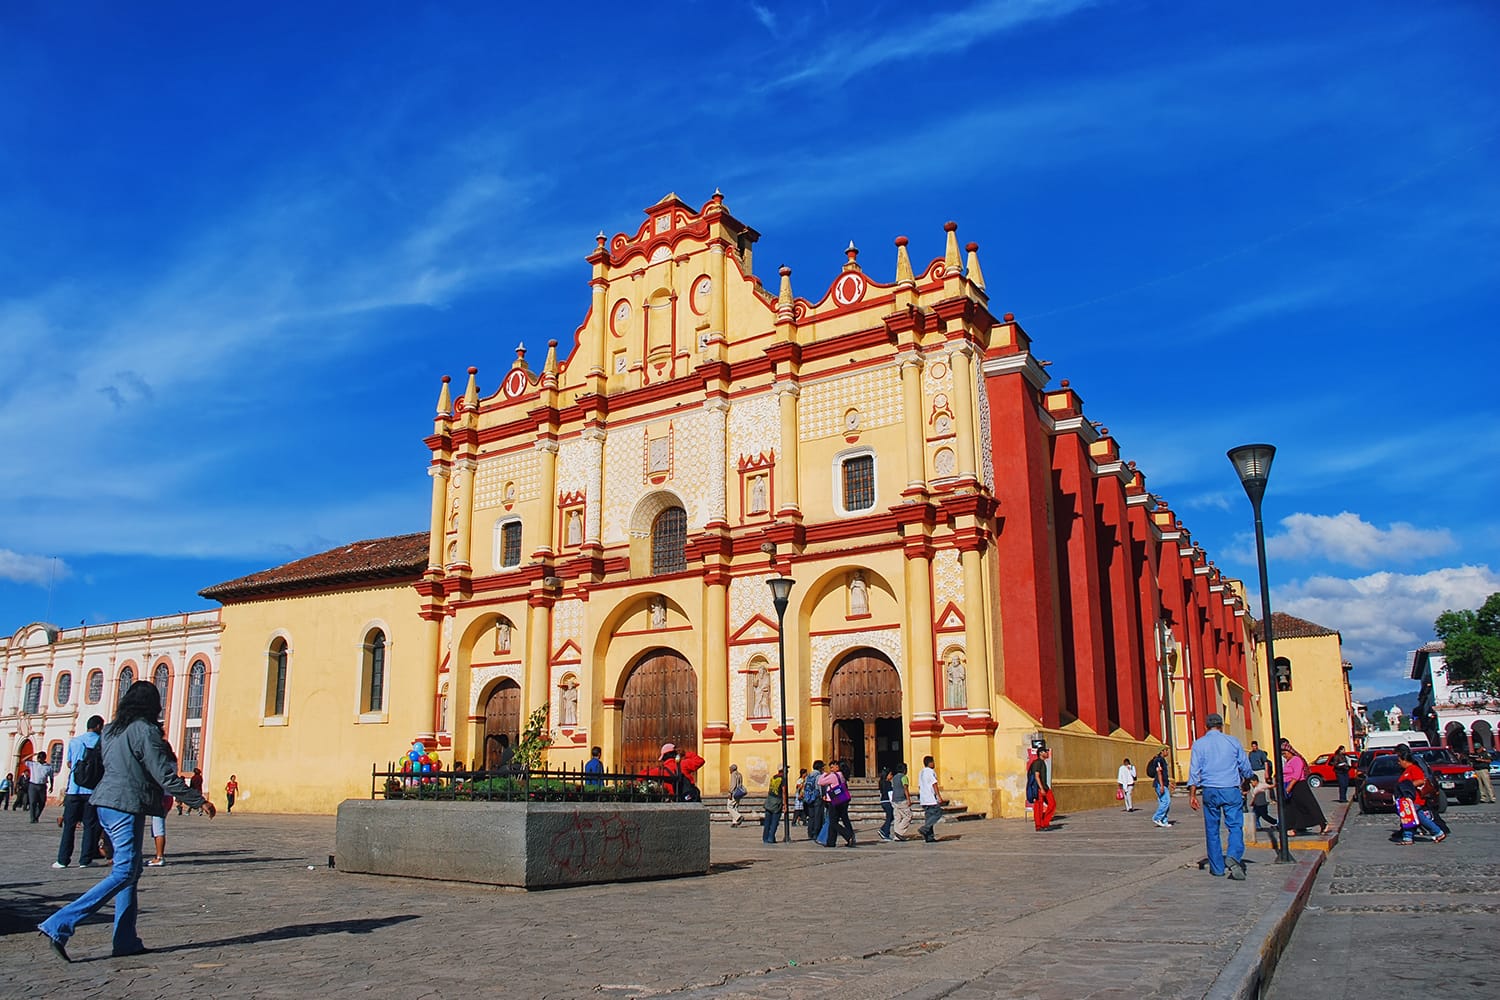 Cathedral on the zocalo in San Cristobal de las Casa, Mexico